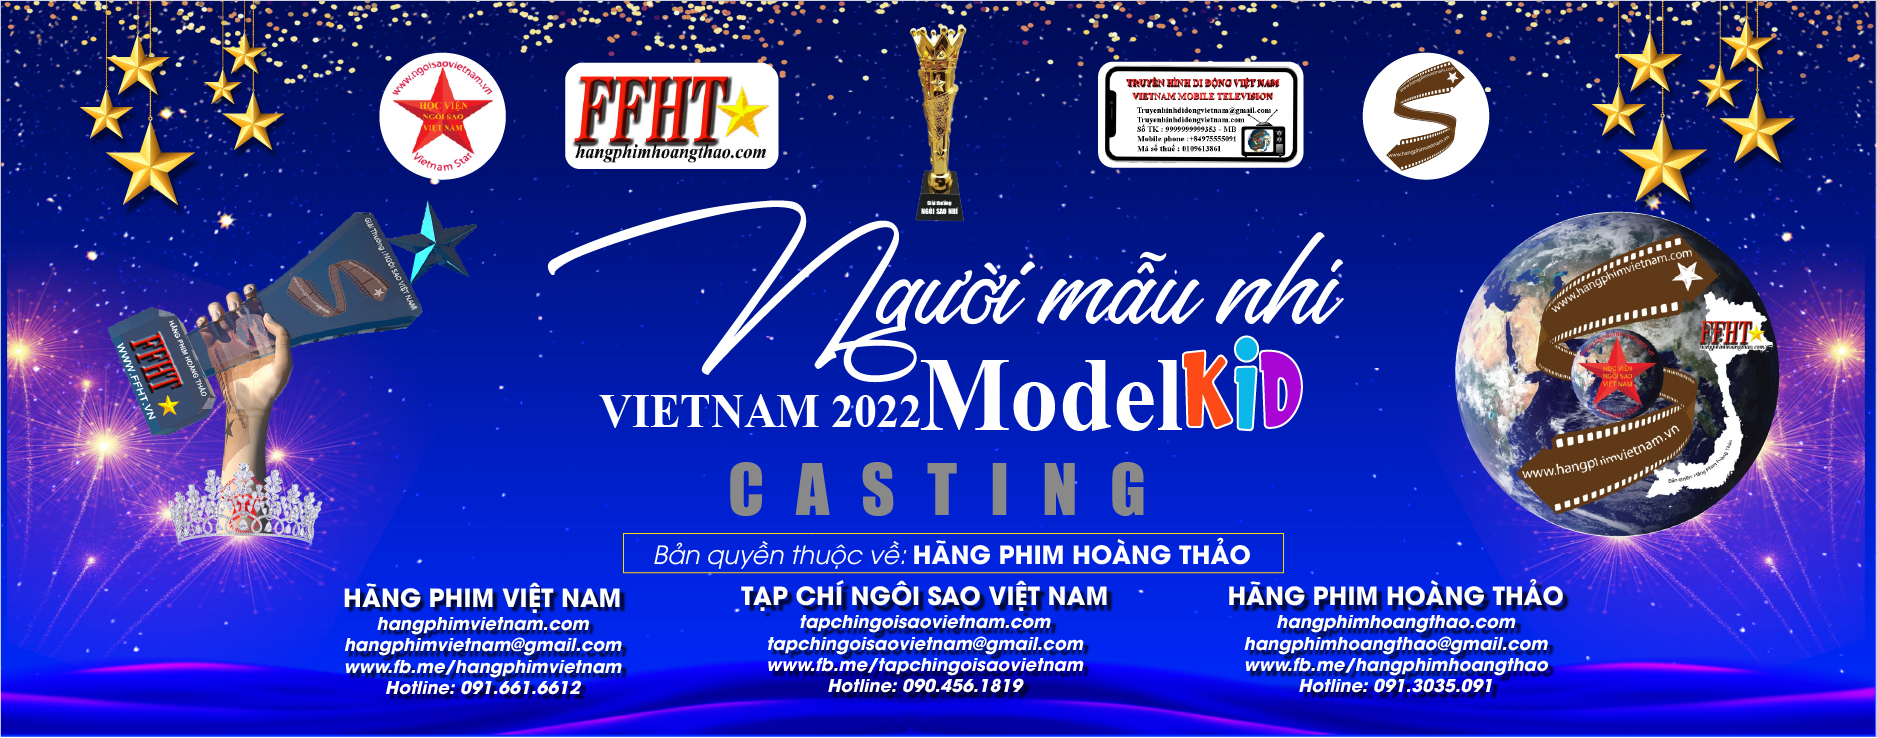 Model kid Vietnam 2022